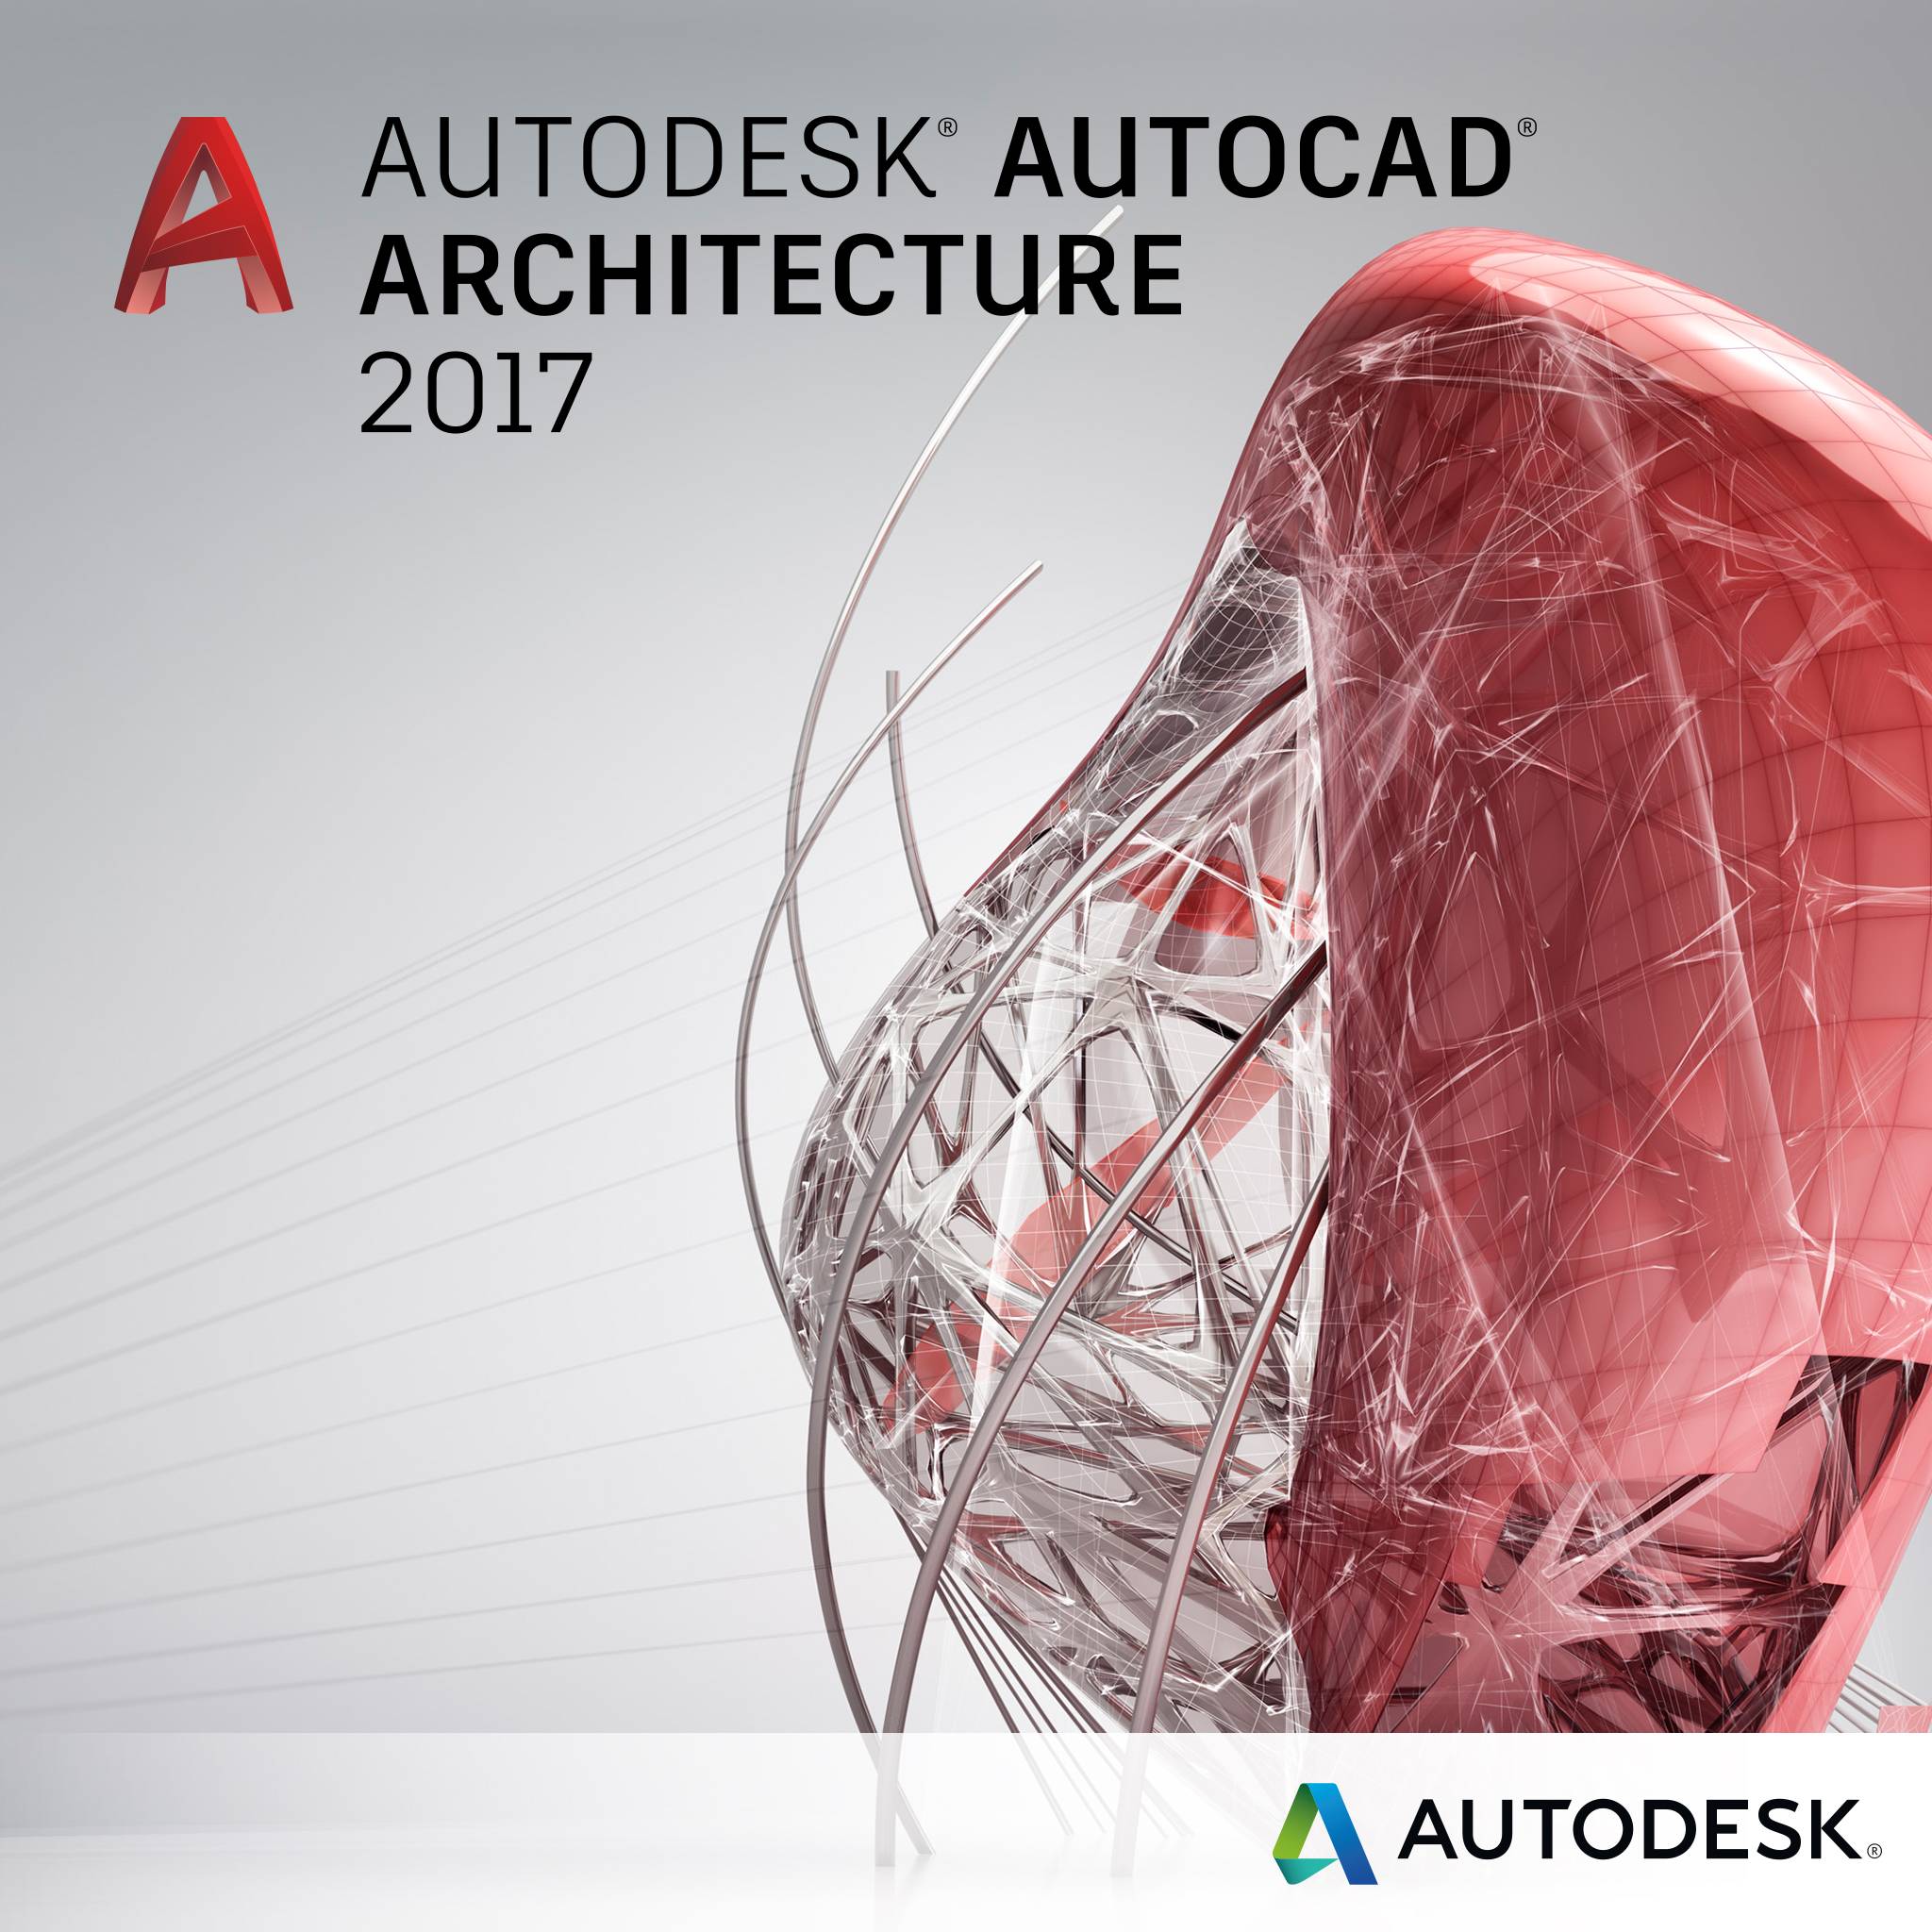 Autodesk architecture. Autodesk AUTOCAD Architecture. Autodesk AUTOCAD Architecture 2023.0.1. AUTOCAD Architecture 2019. Autodesk AUTOCAD Architecture 2021.